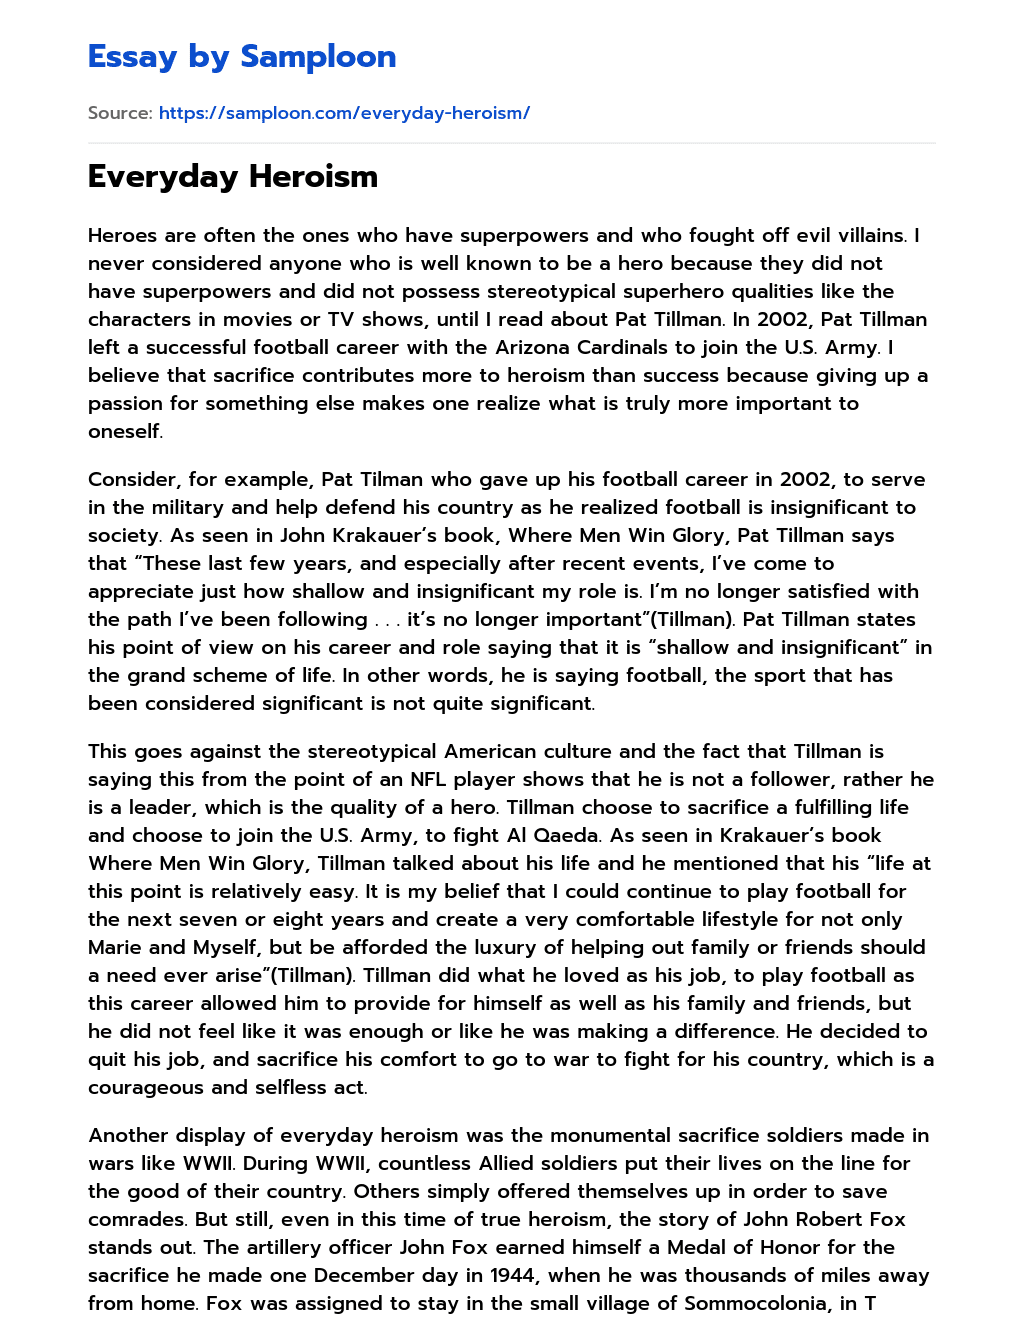 Everyday Heroism essay